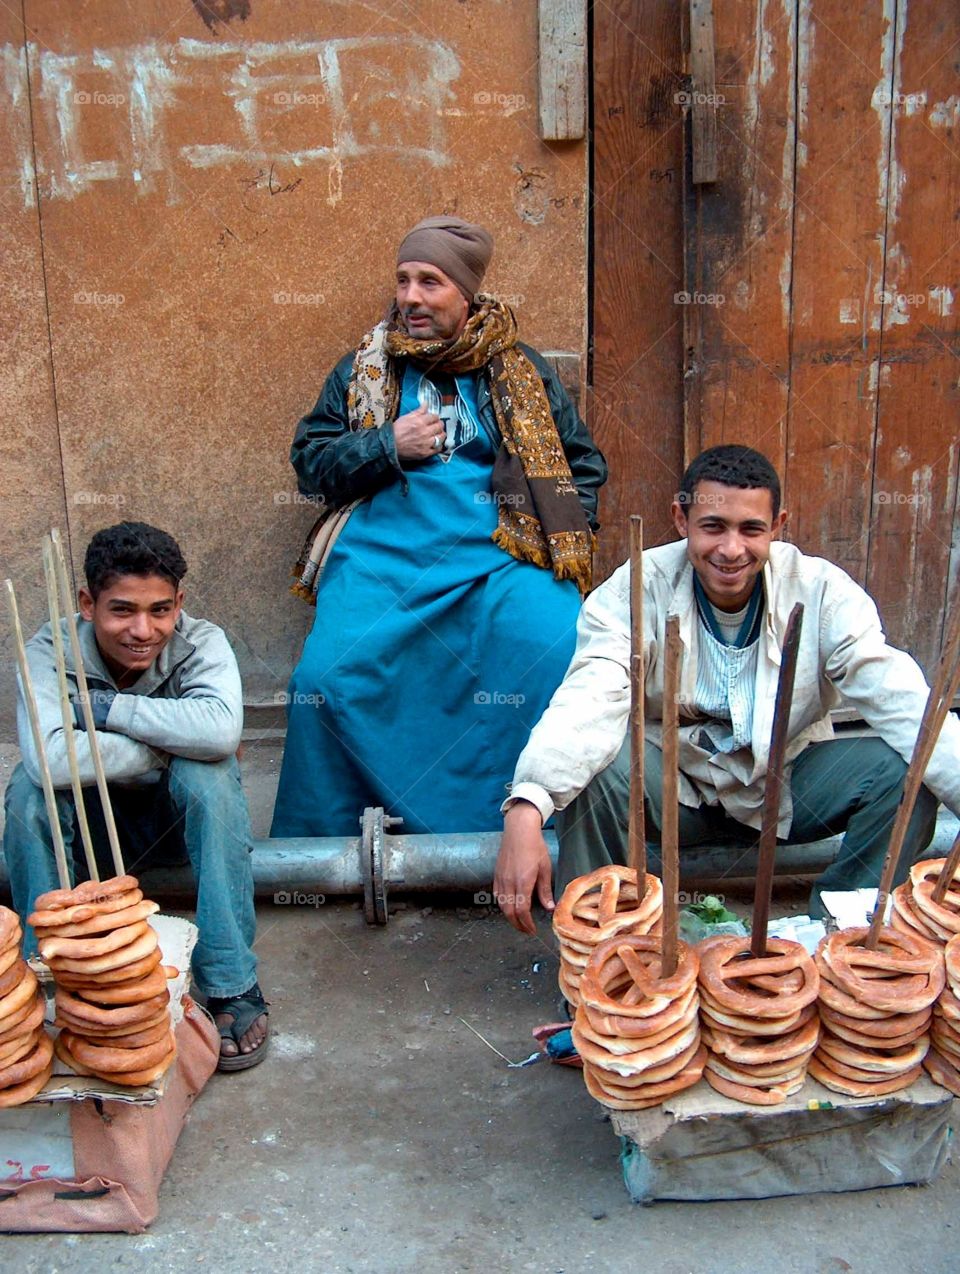 Pretzel vendors in Cairo. Friendly pretzel vendors in Cairo, Egypt